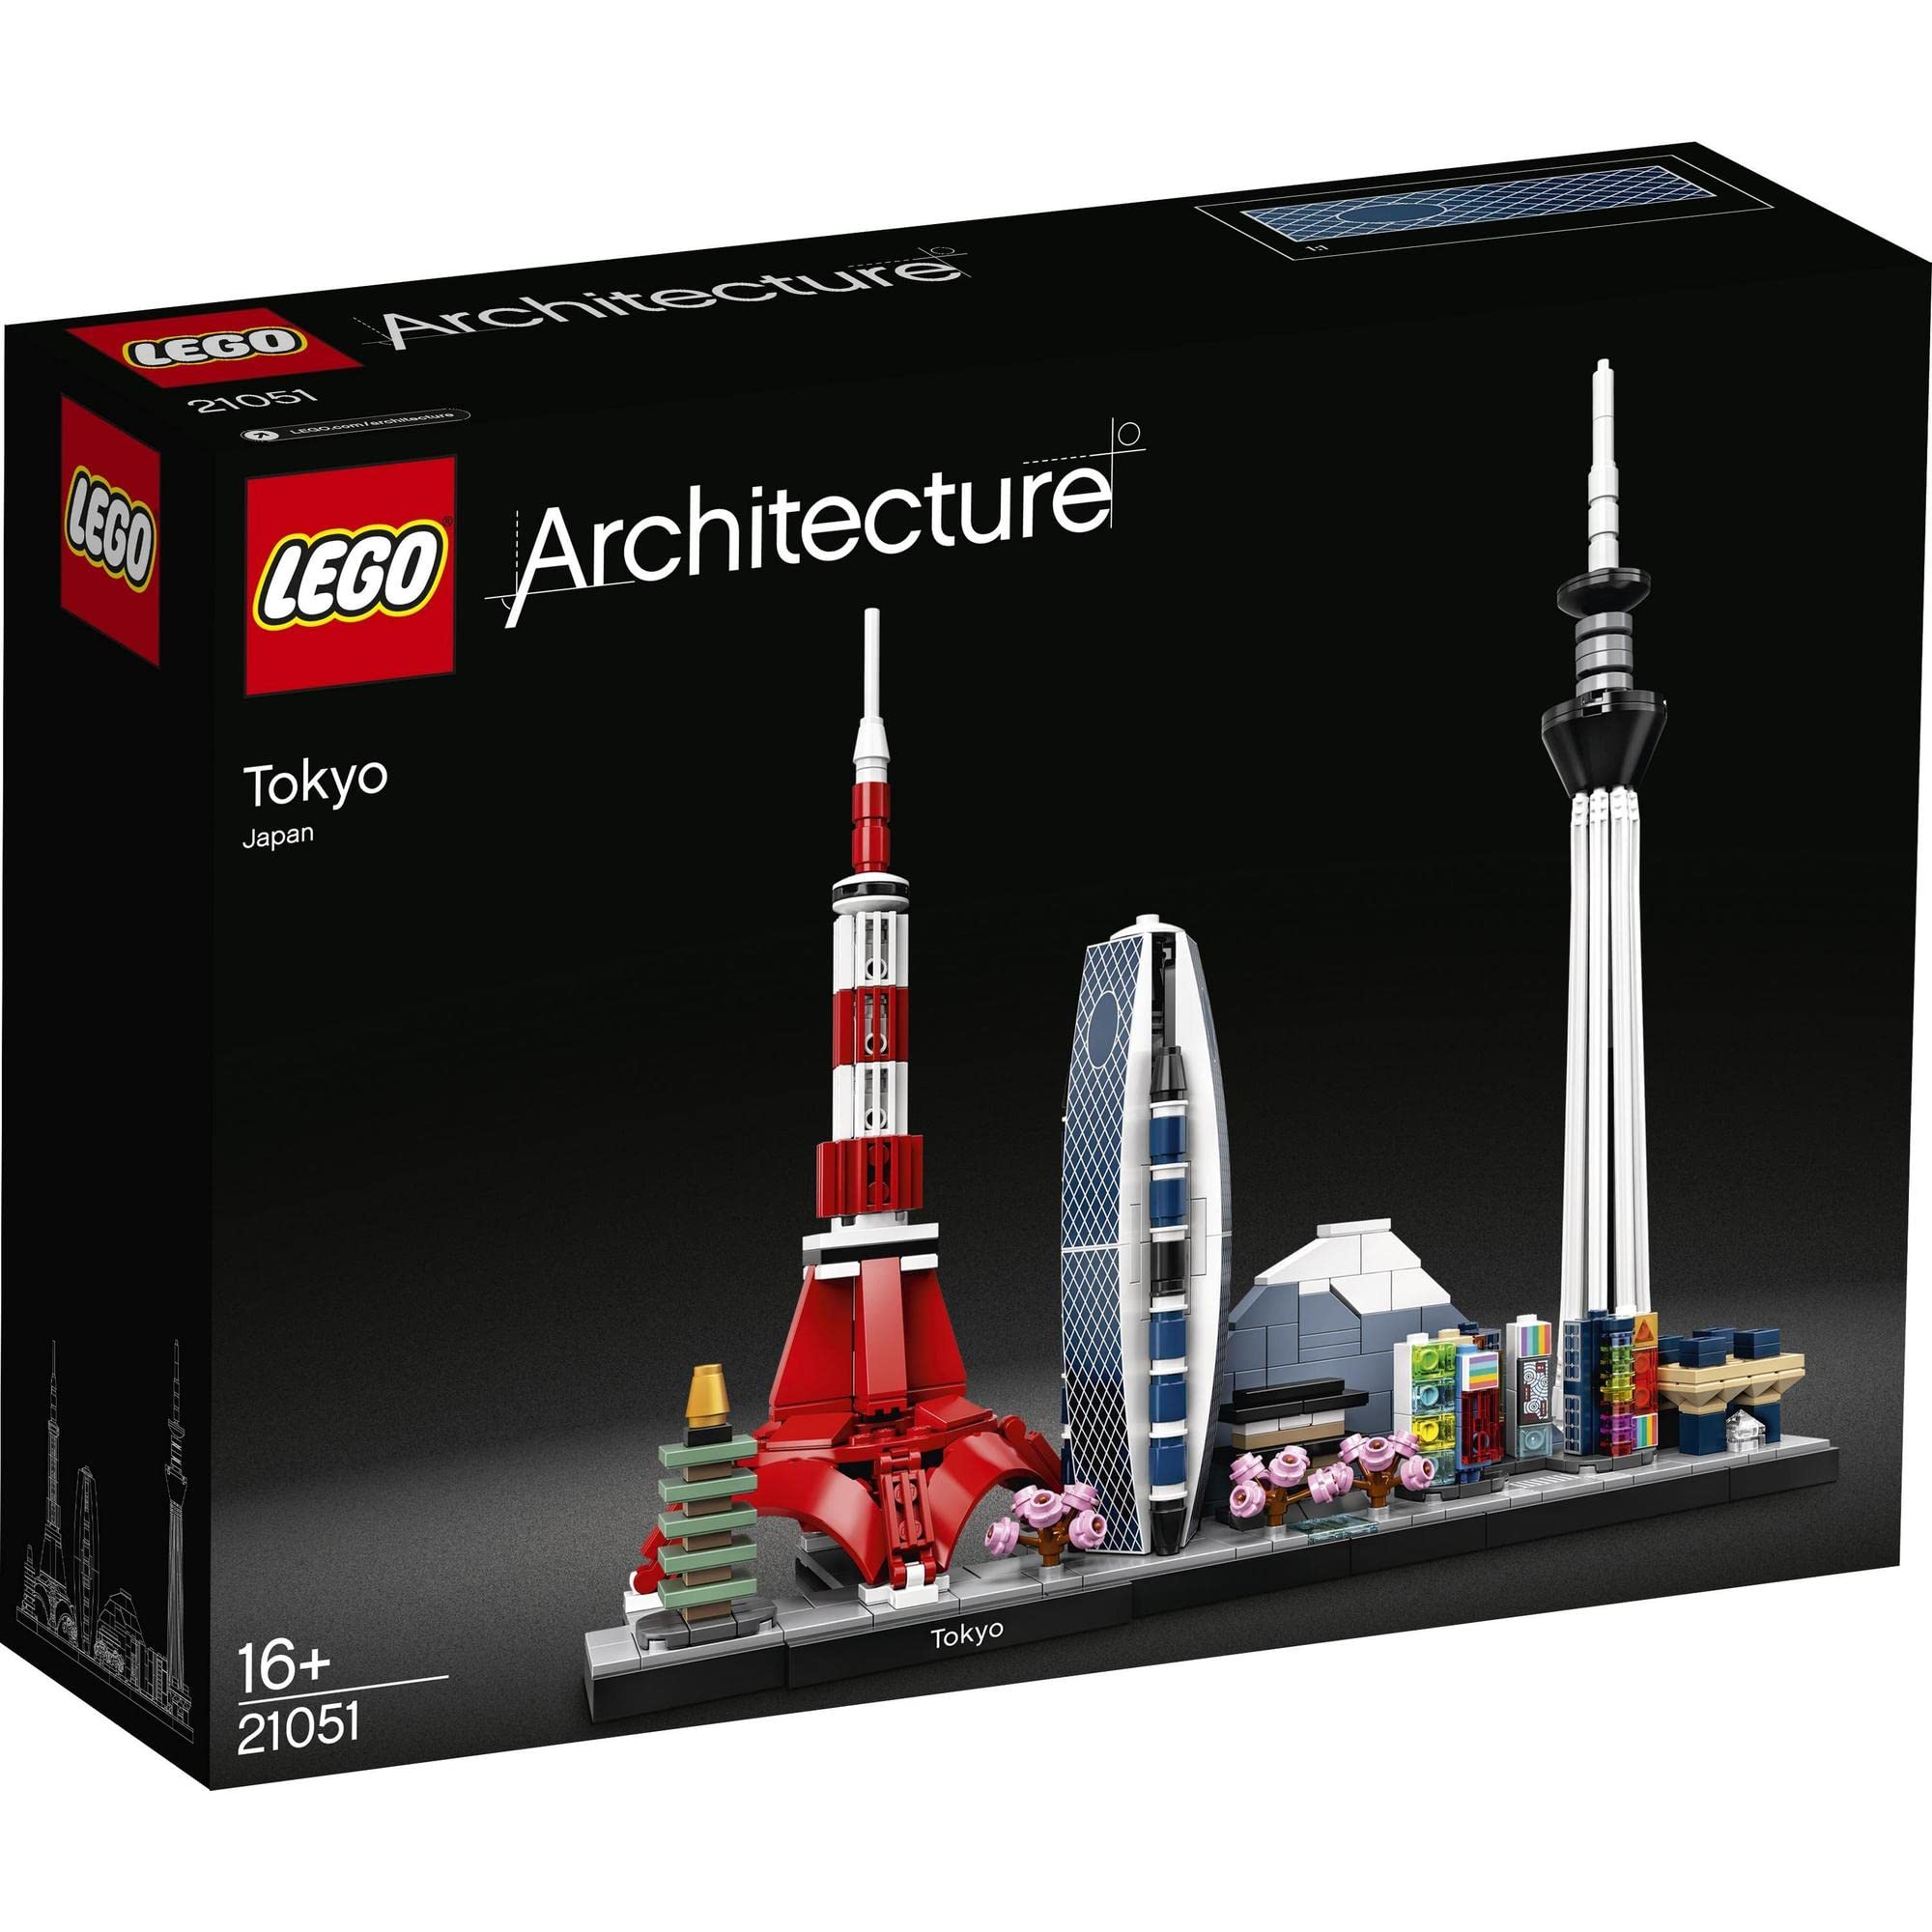 Lego Architecture Tokyo 21051 Toy Block architecture travel design 547 pieces